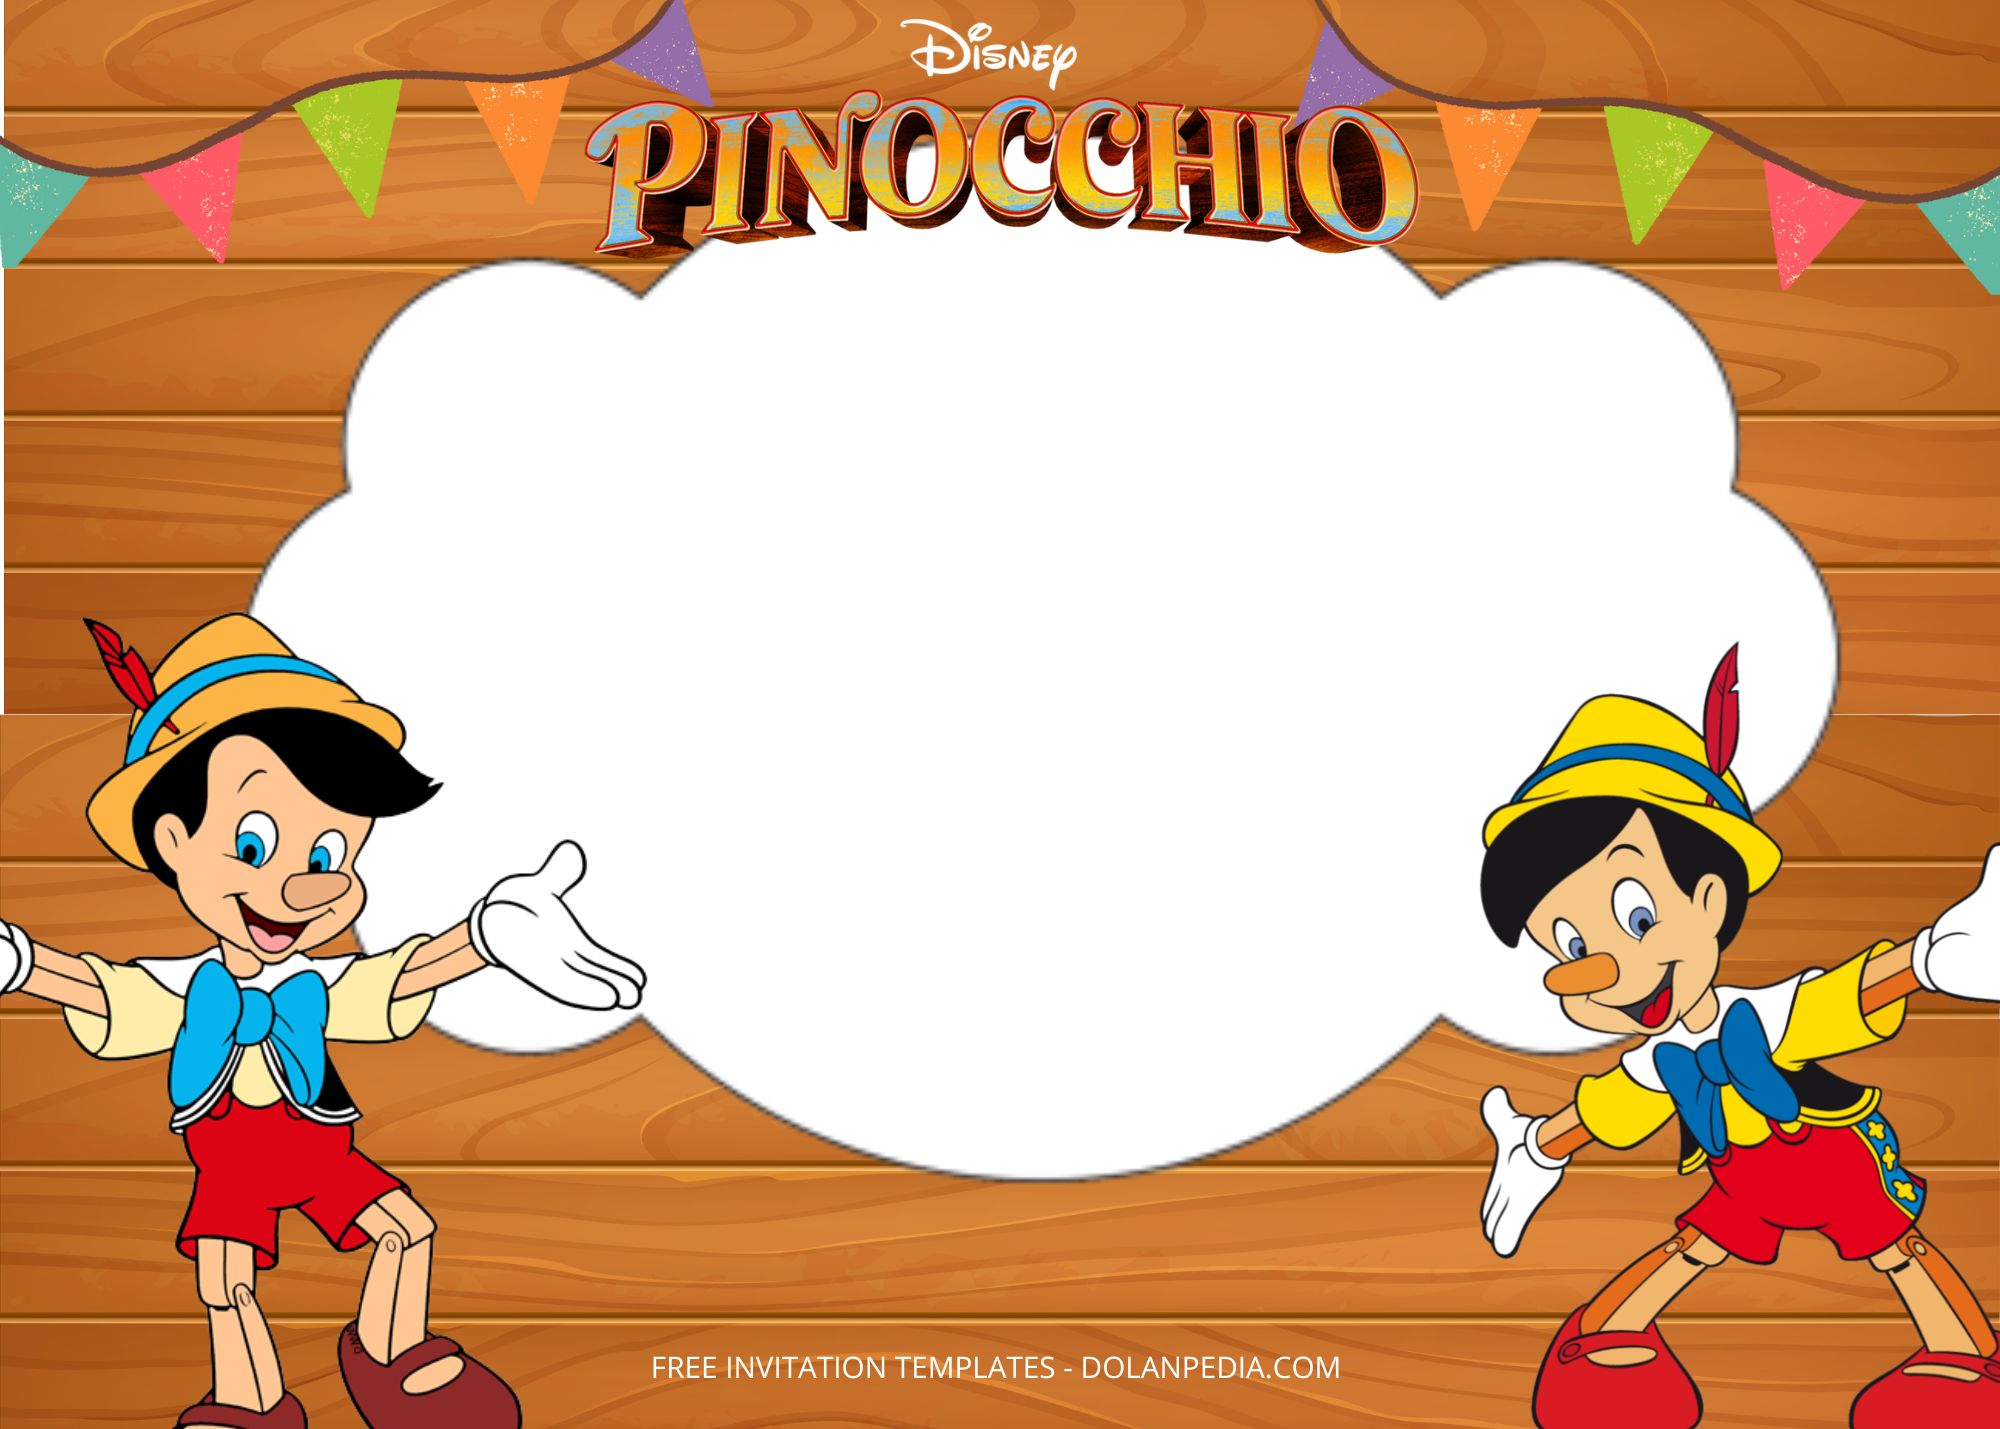 Blank Pinocchio Birthday Party Templates Two